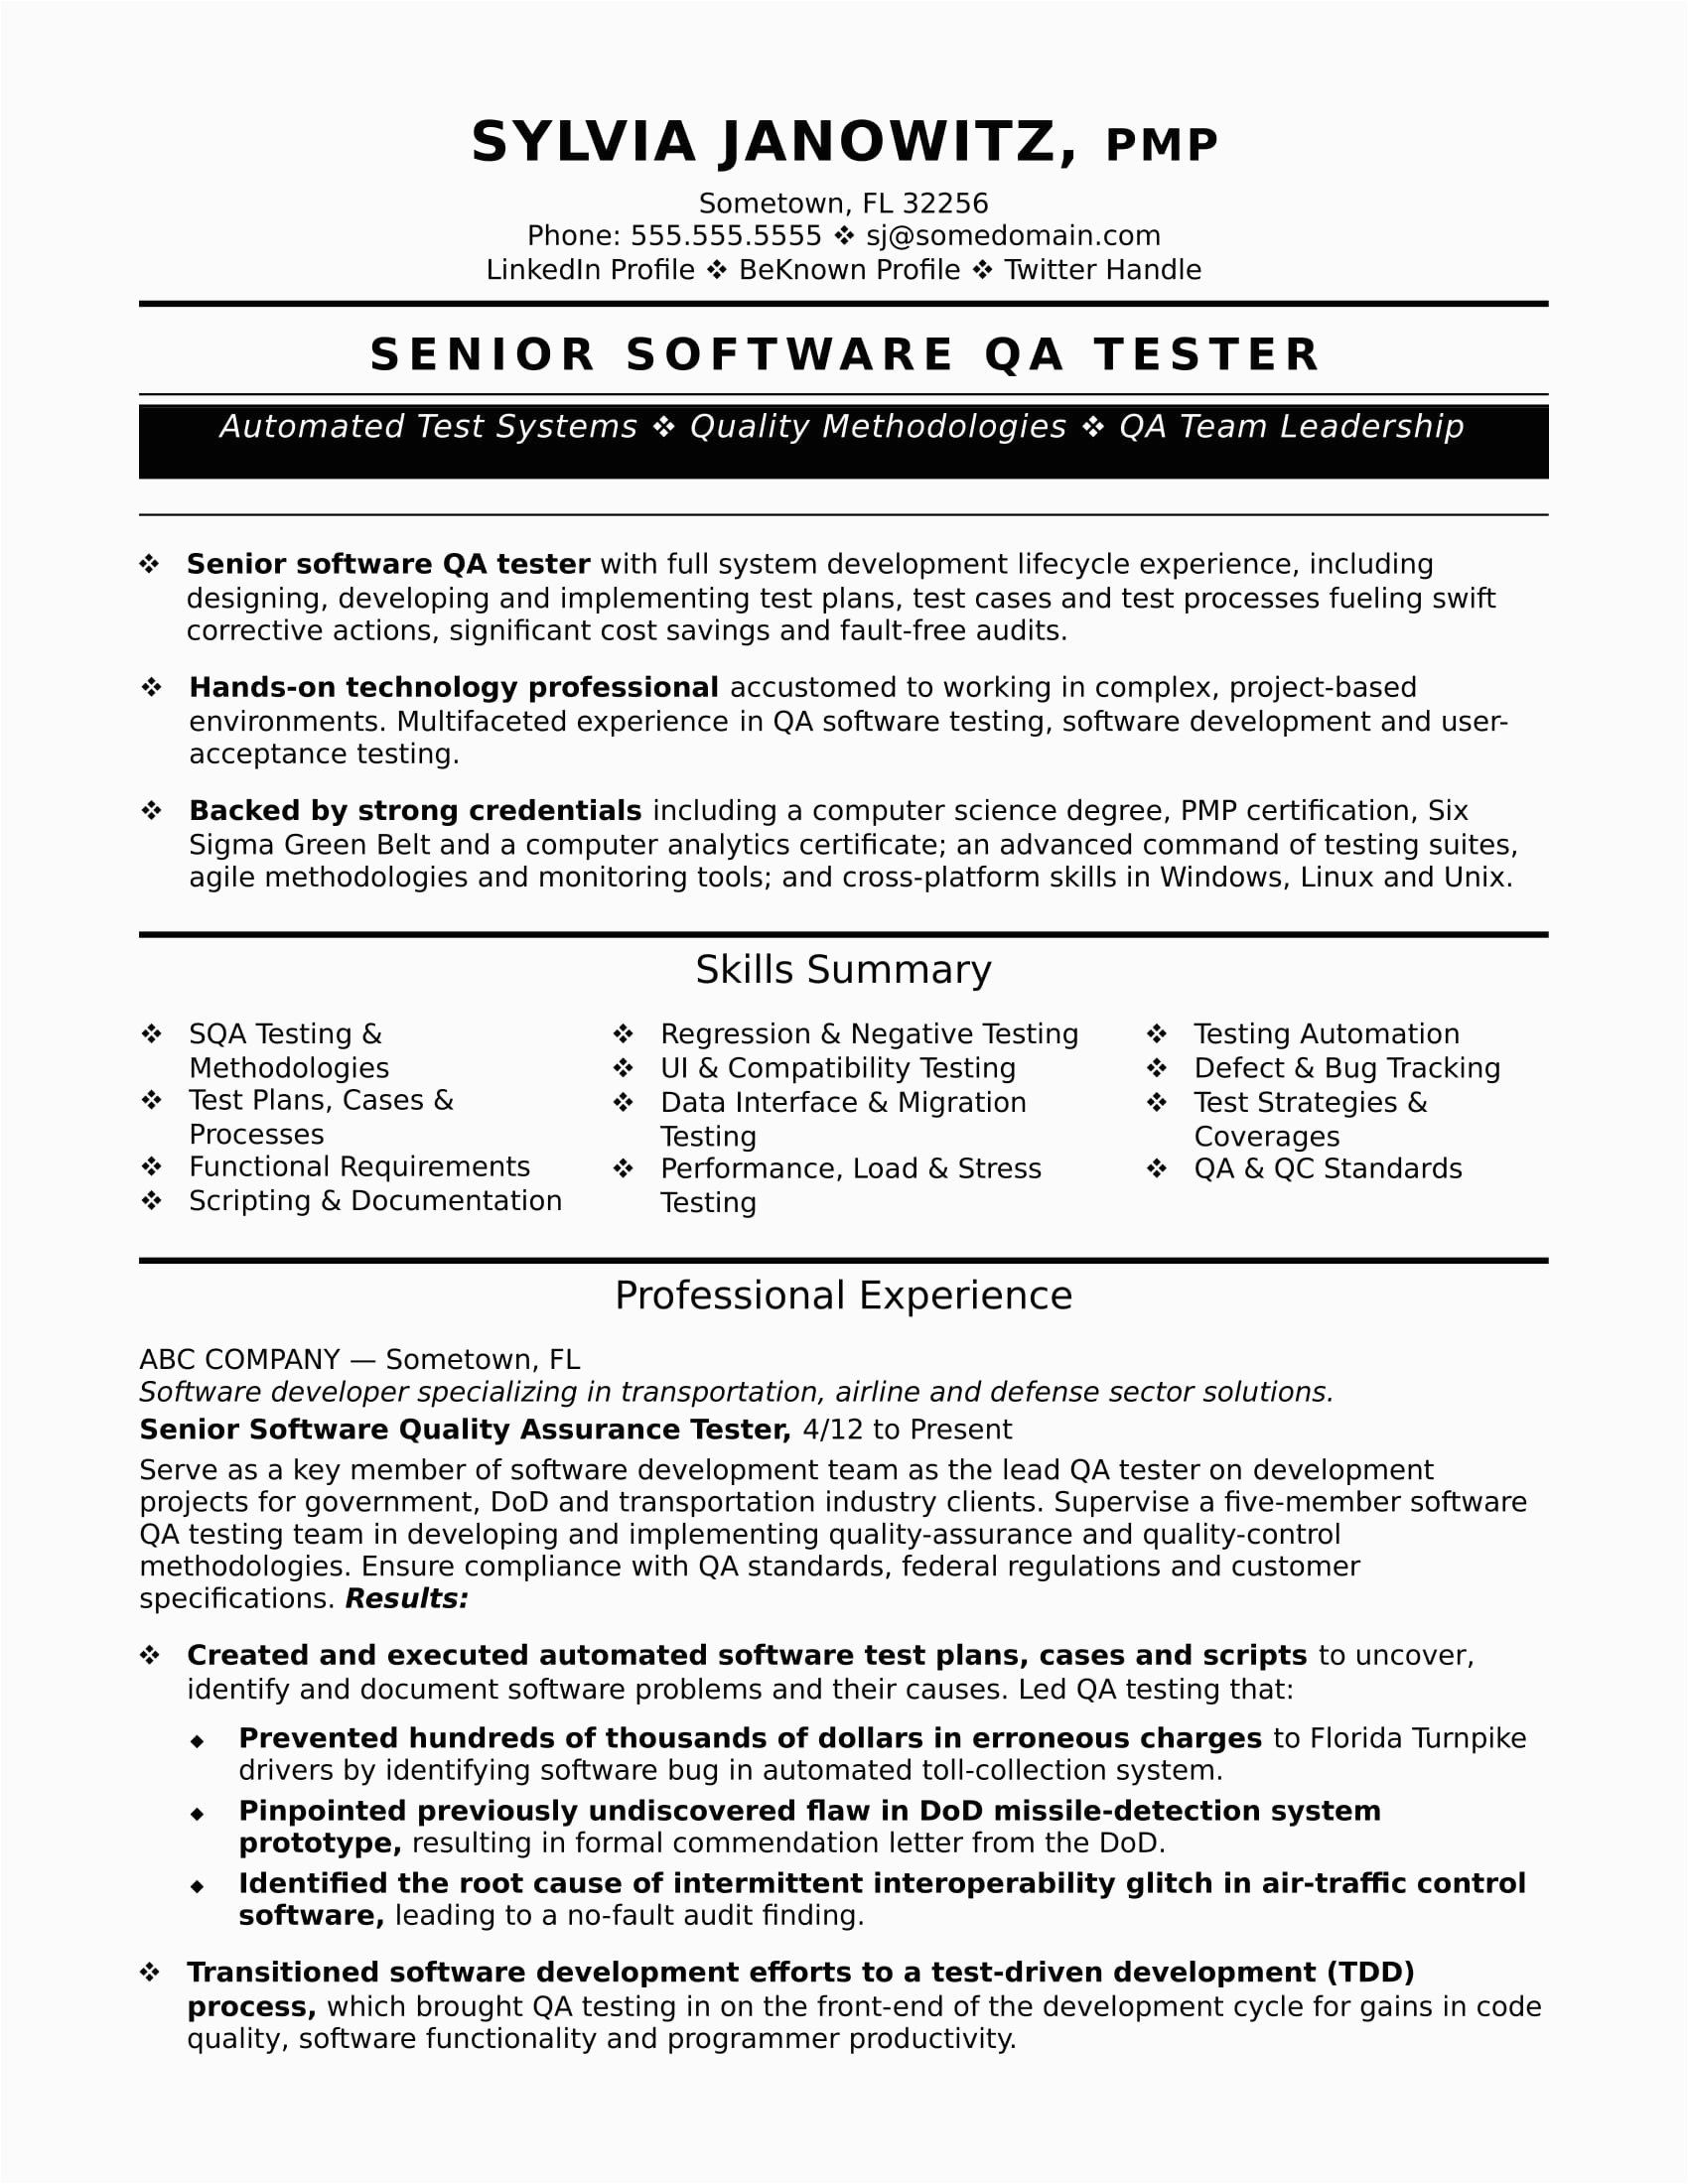 Software Quality assurance Tester Sample Resume Experienced Qa software Tester Resume Sample